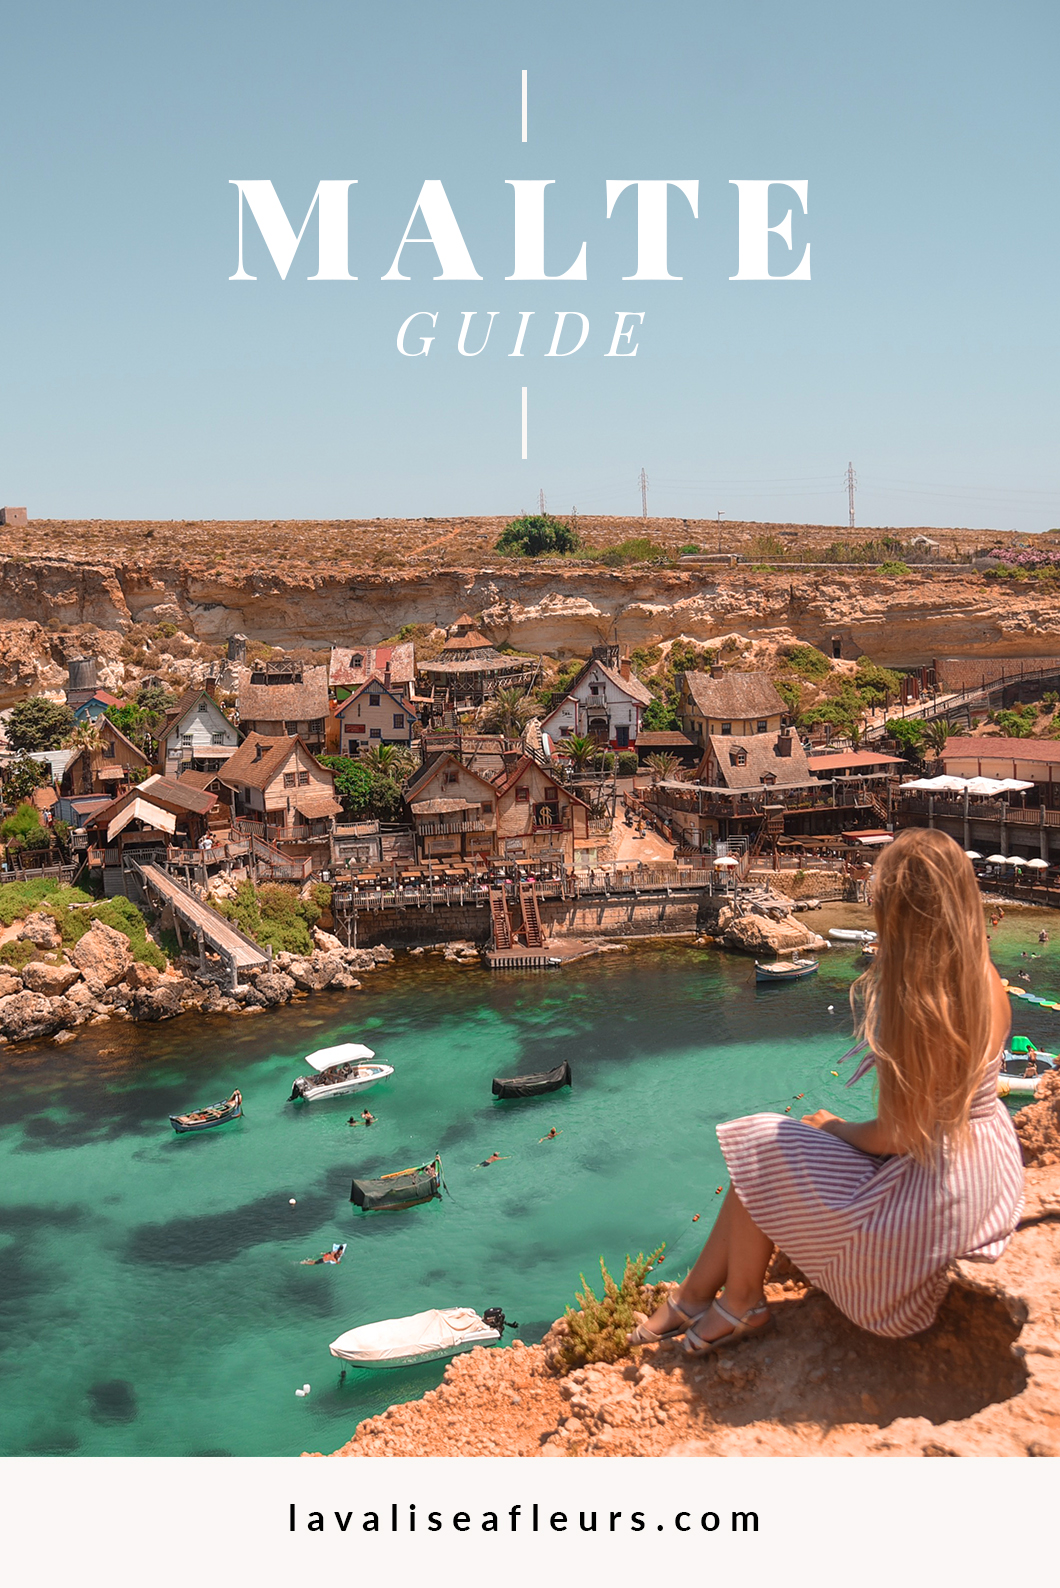 Guide d'un voyage à Malte